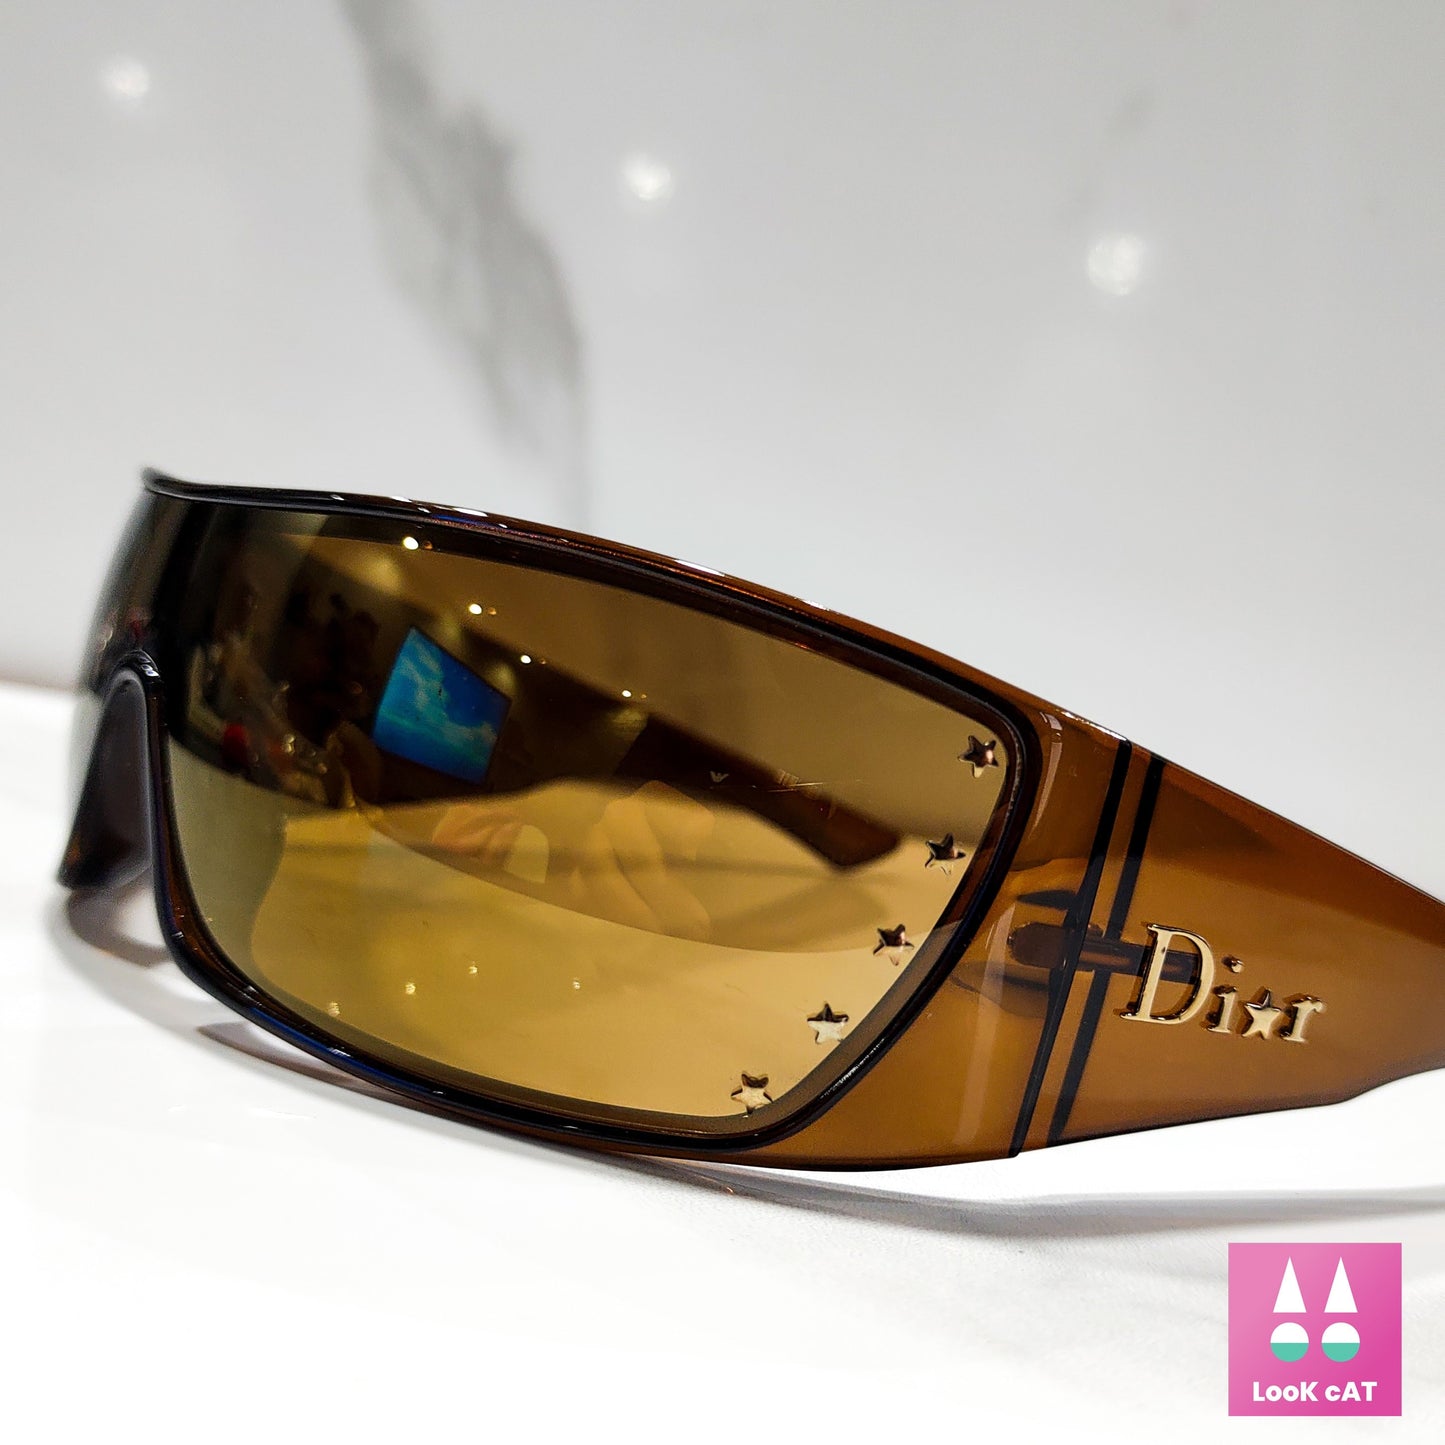 Christian Dior STELLE occhiali da sole vintage occhiali gafas y2k made in Italy avvolgente maschera scudo avvolgente